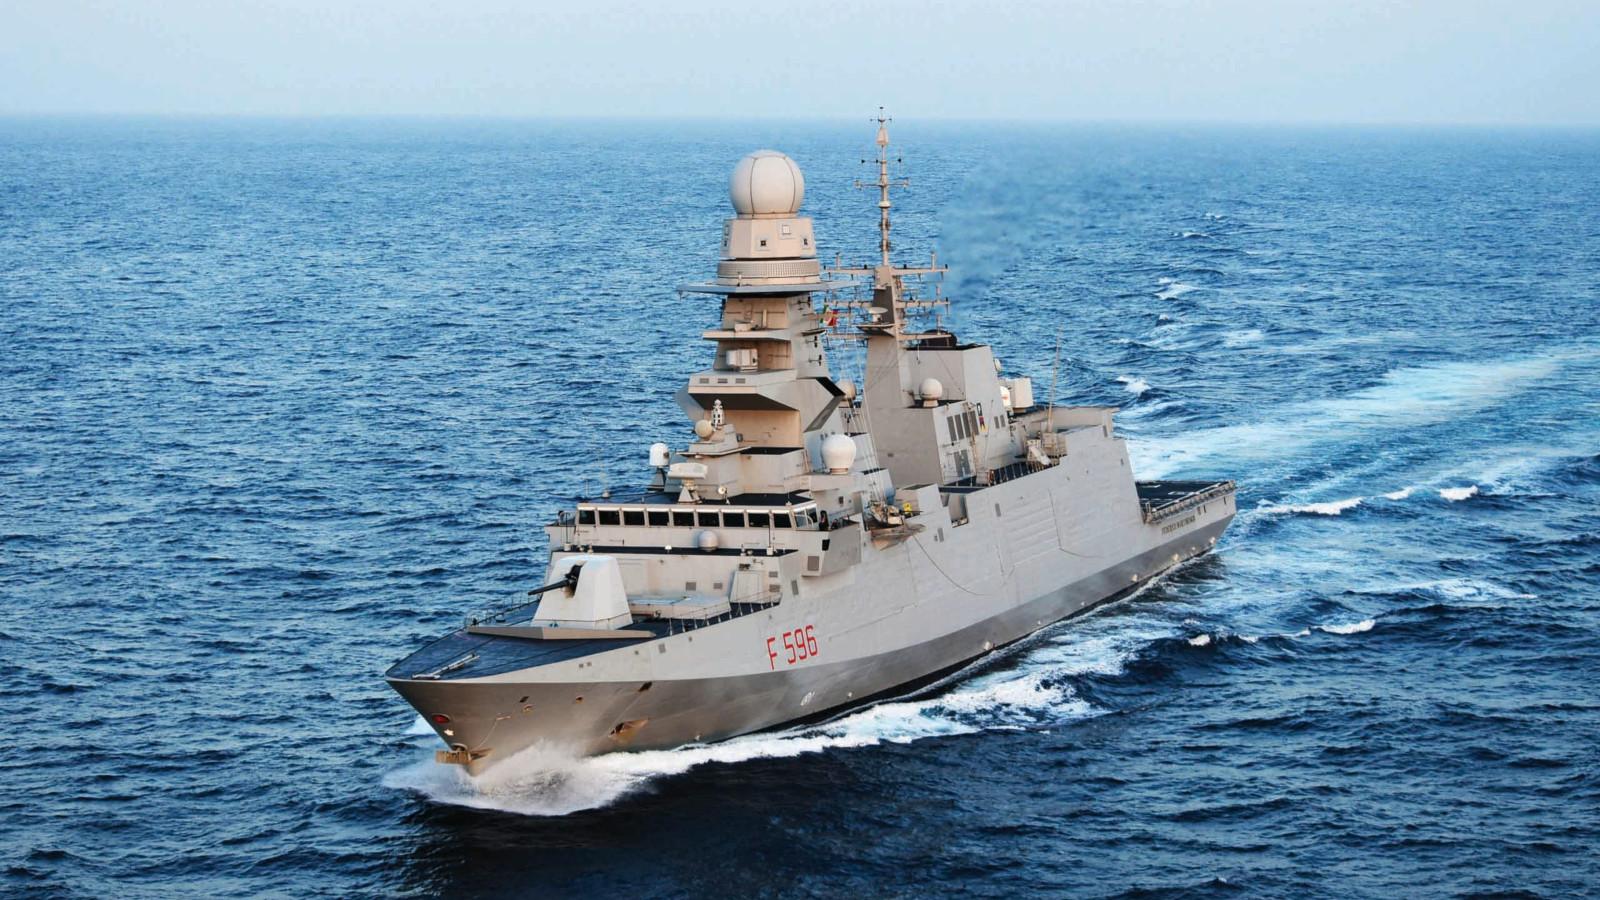 Fincantieri-built Italian Navy’s Frigate Federico Martinengo at Hamad Port